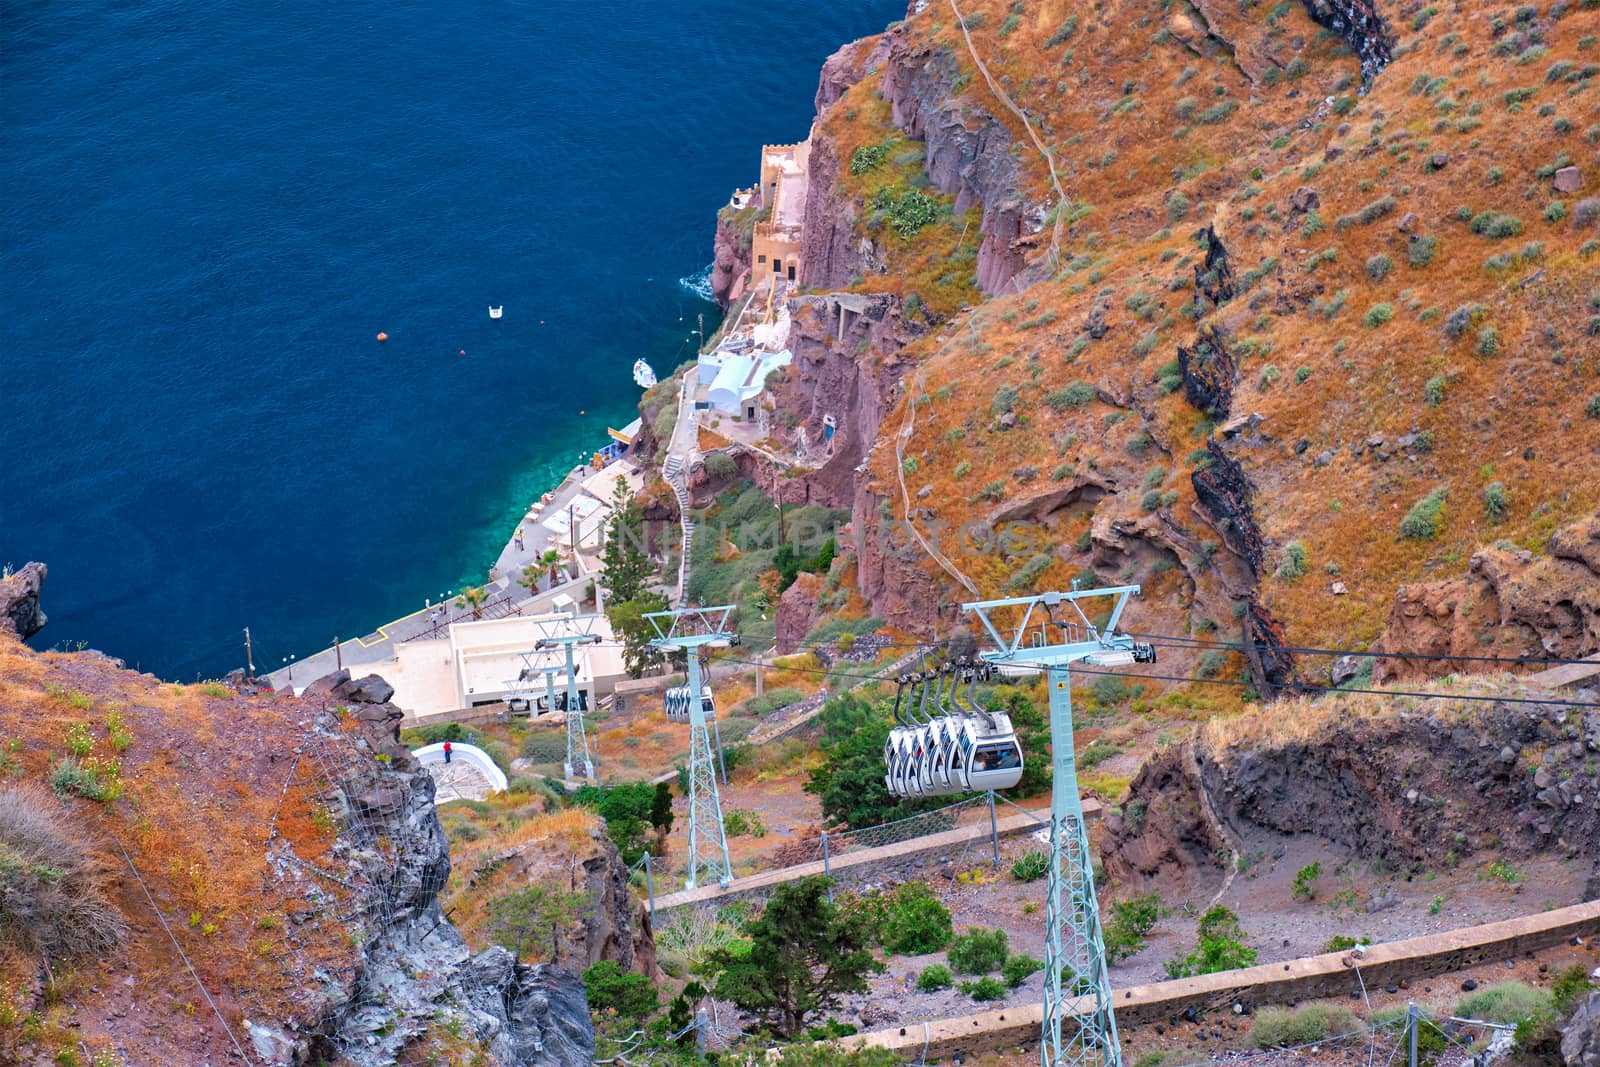 Tourist cable car lift in Fira on Santorini island, Greece